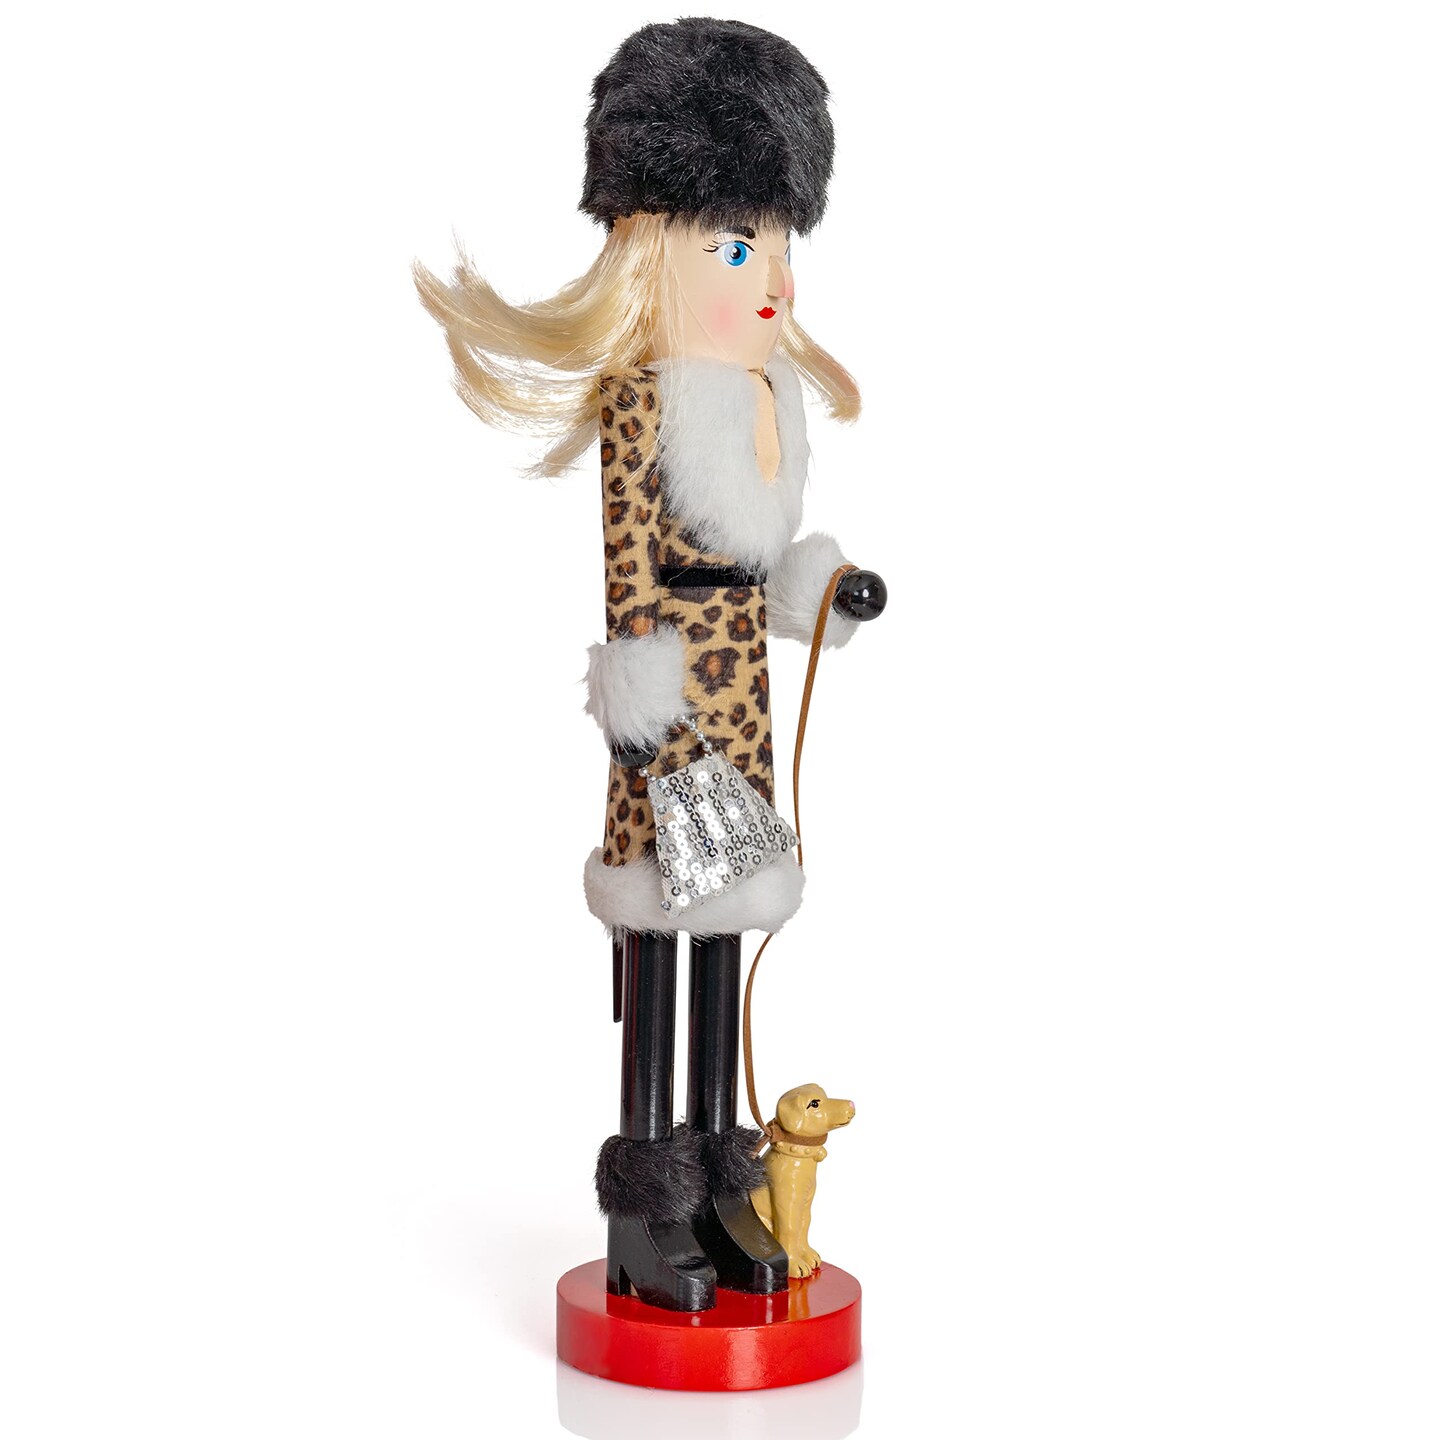 Ornativity Shopping Lady Christmas Nutcracker - Wooden Glitter Shopper with Dog Themed Holiday Nut Cracker Doll Figure Toy Decorations